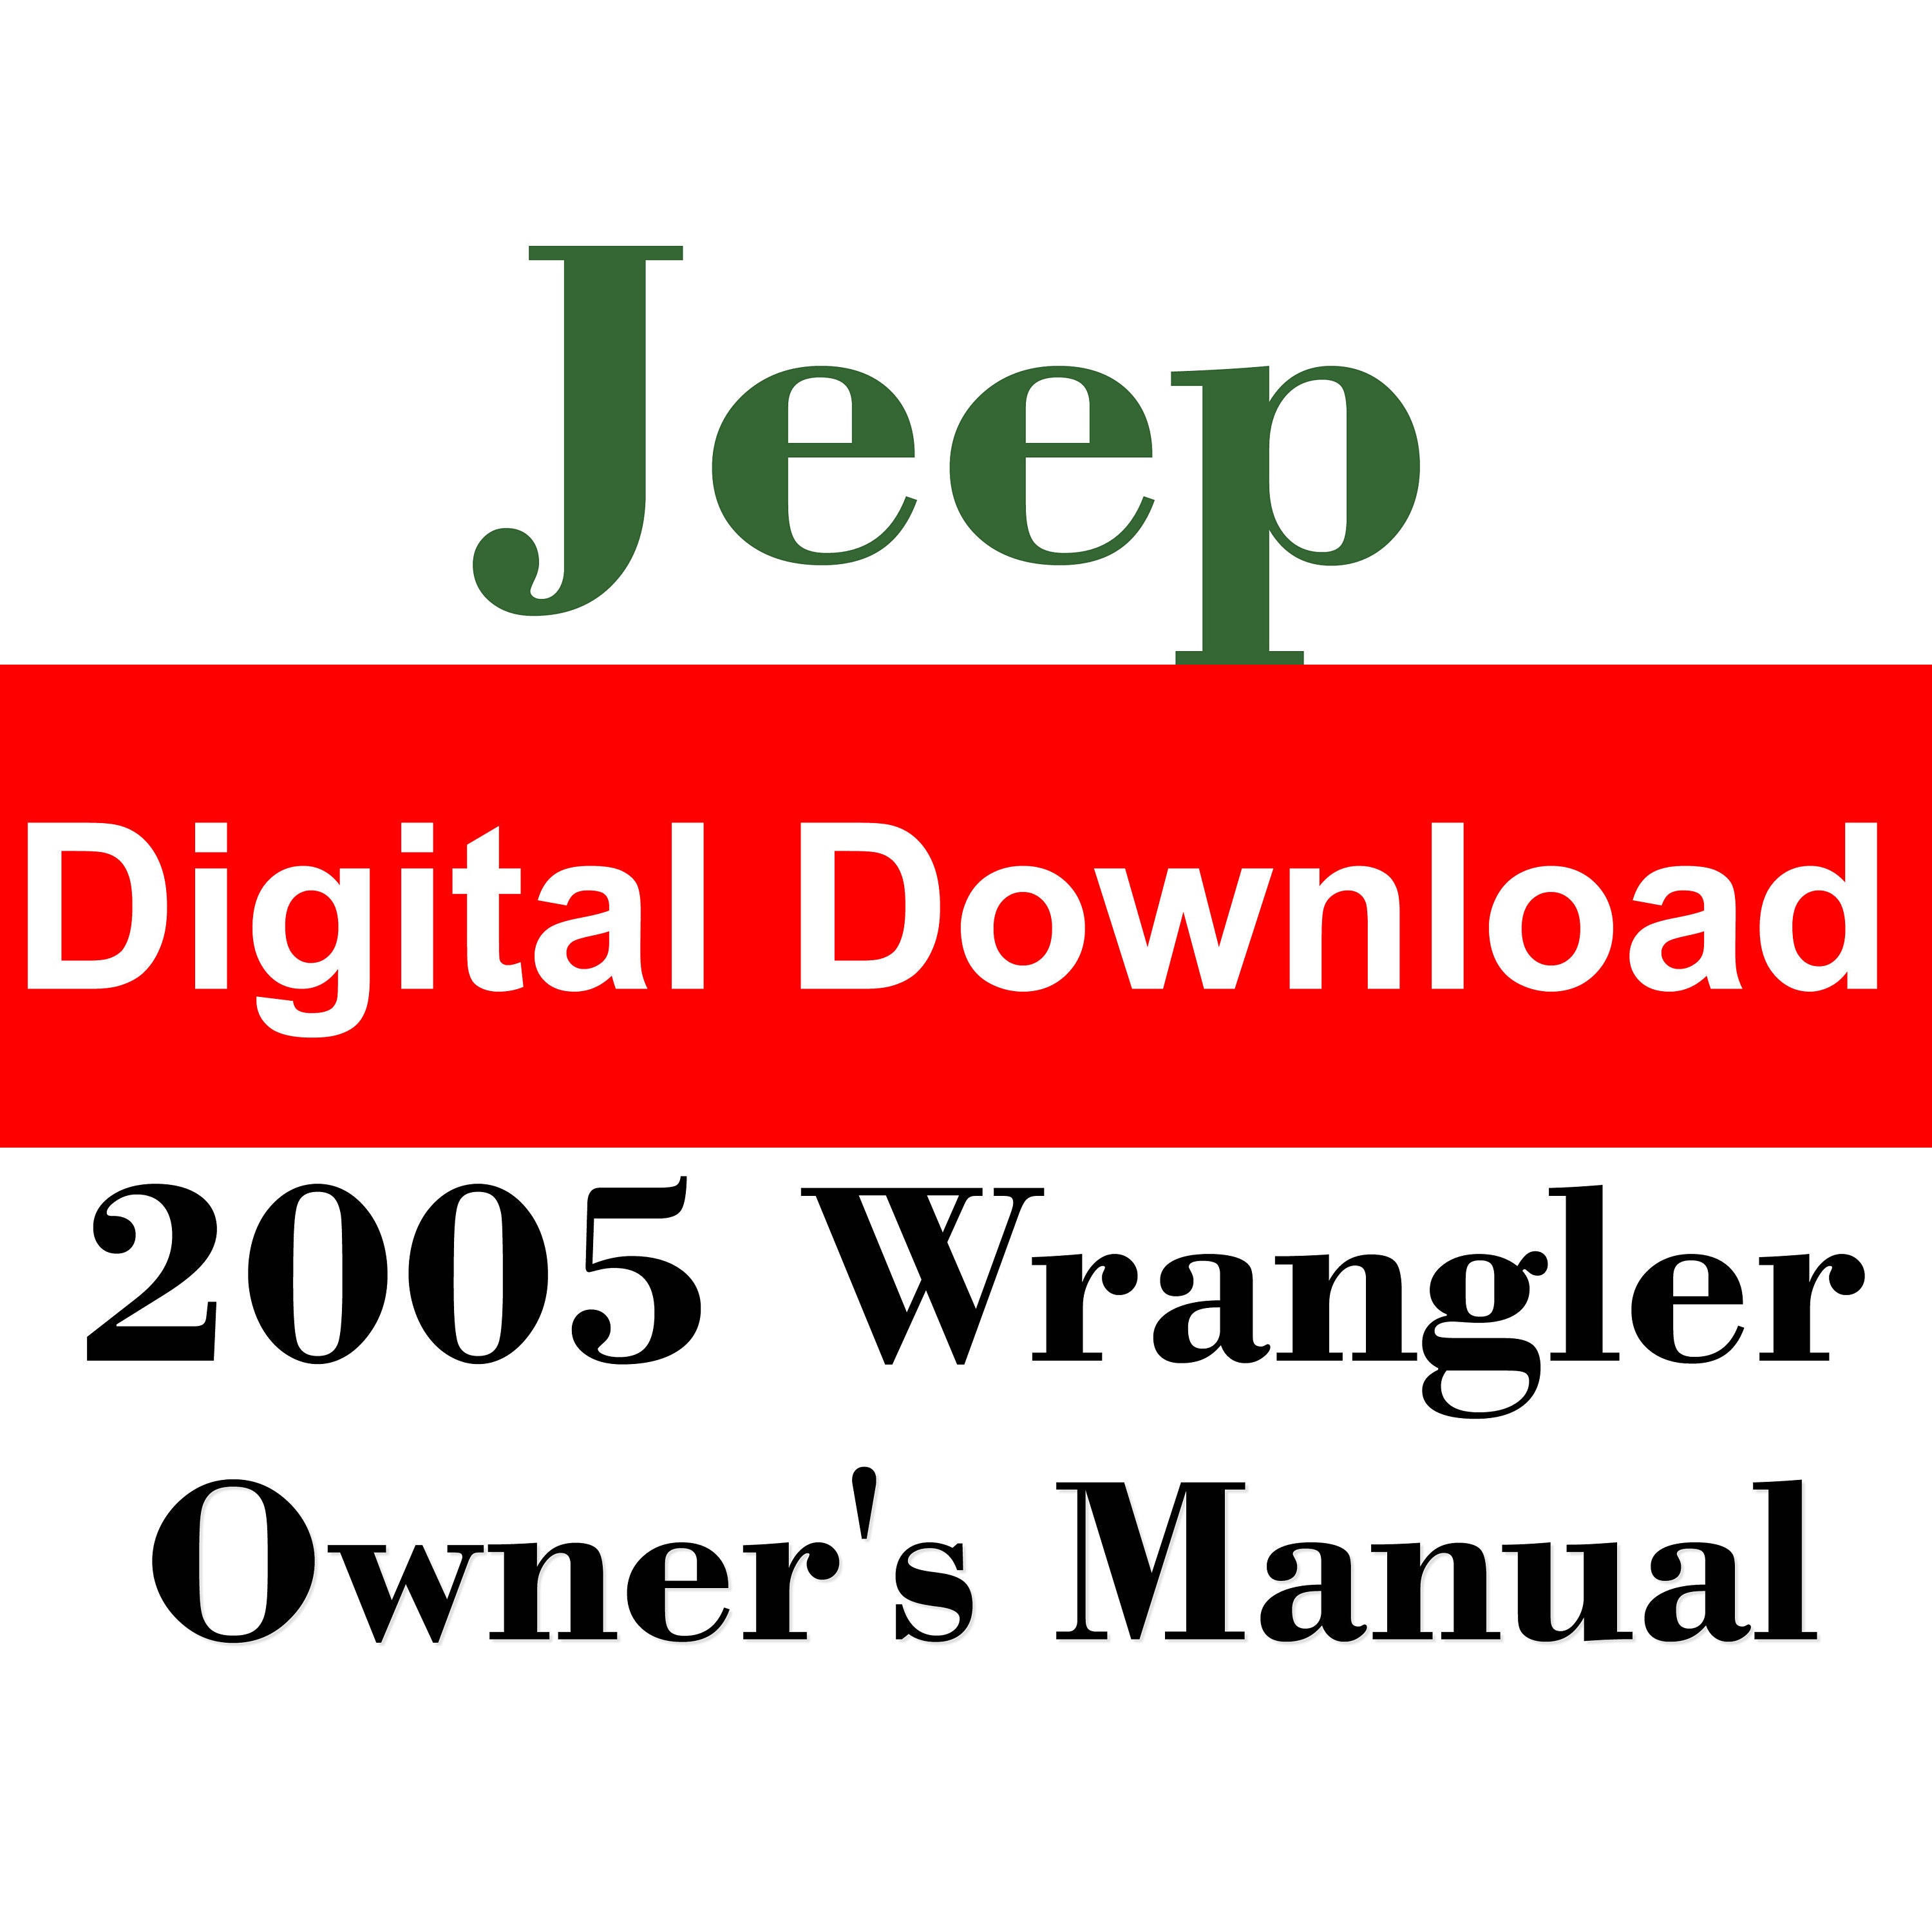 2005 Jeep Wrangler Owners Manual PDF Digital Download - Etsy